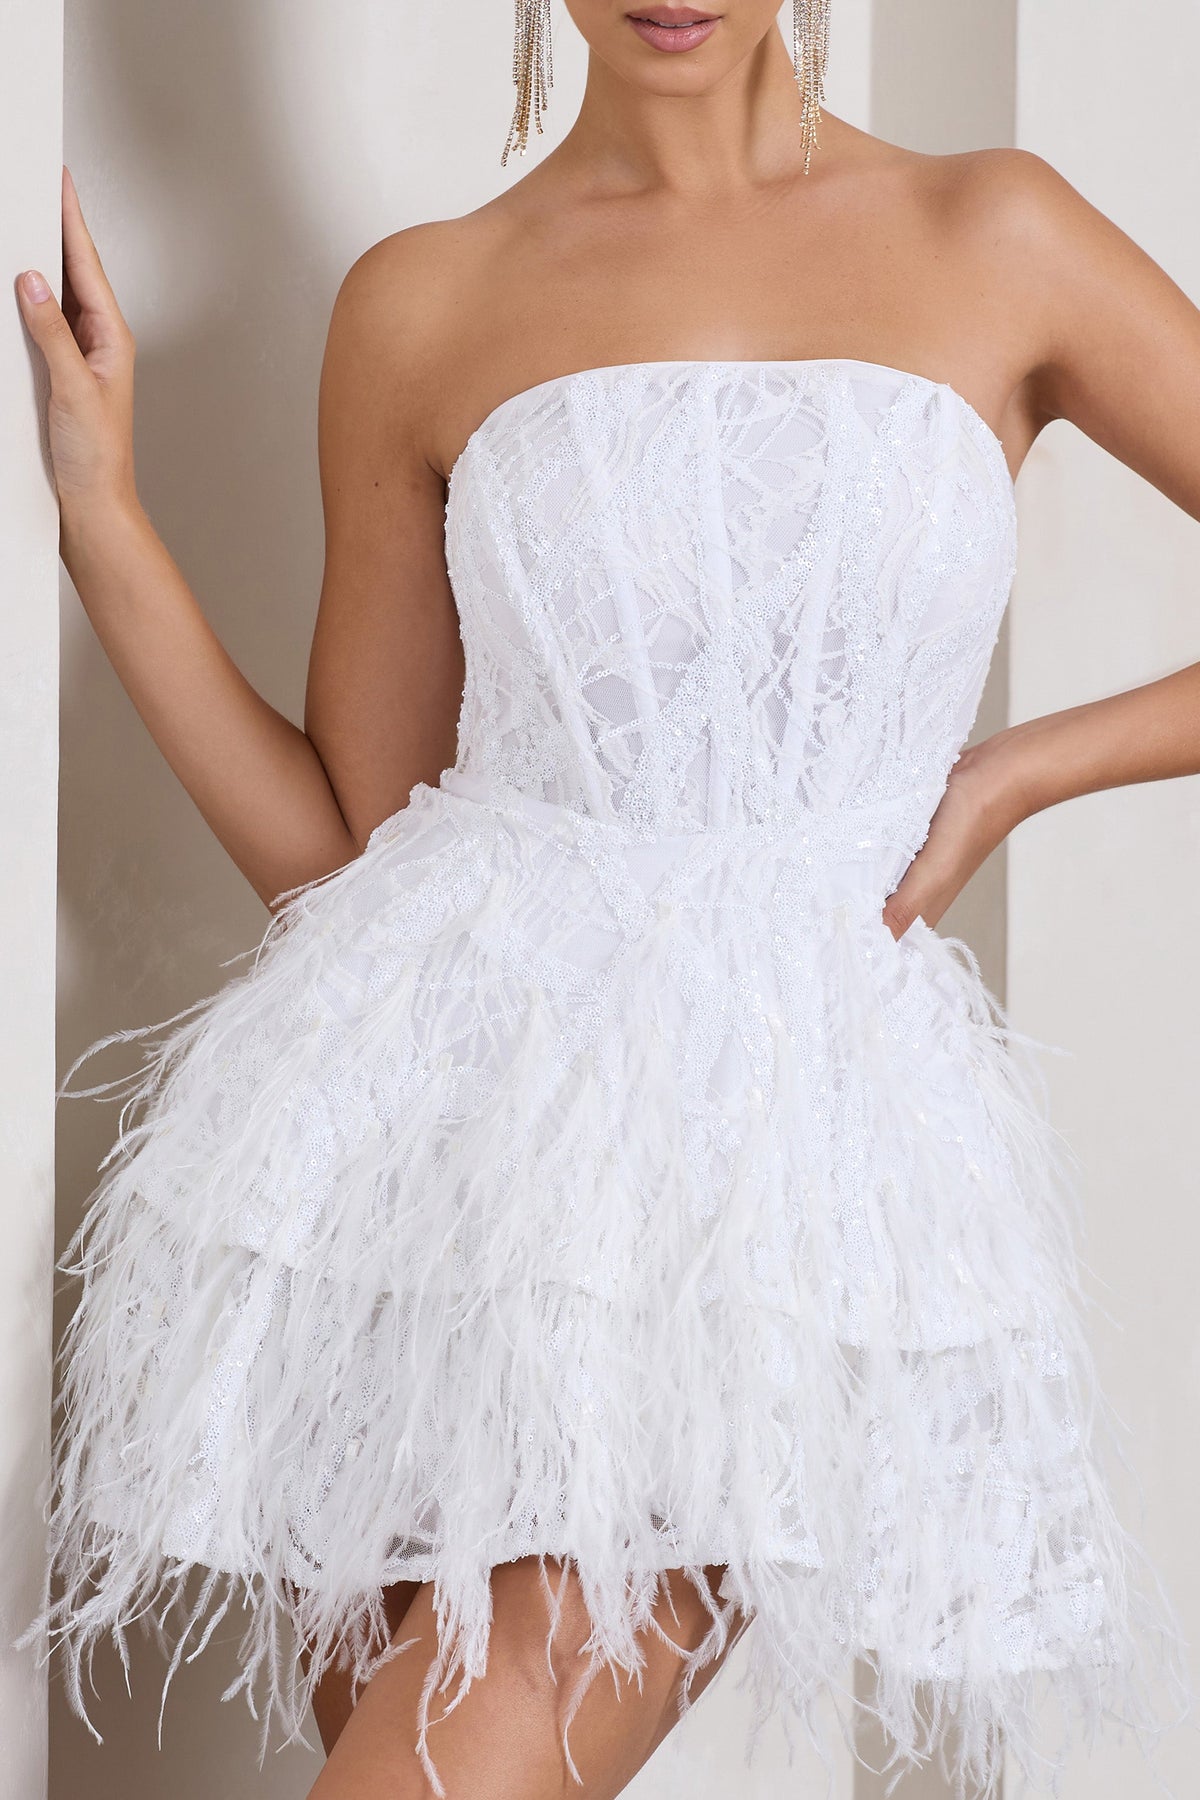 White Lace Strapless Dress, Cute Bachelorette Party Dress